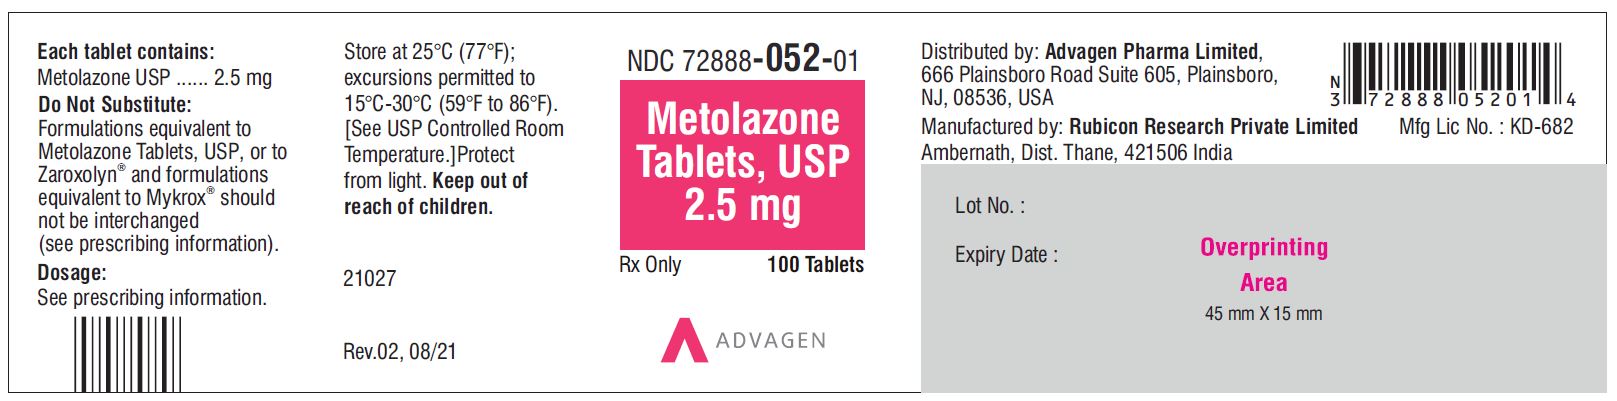 Metolazone Tablets USP, 2.5mg - NDC 72888-052-01 - 100 Tablets Bottle Label